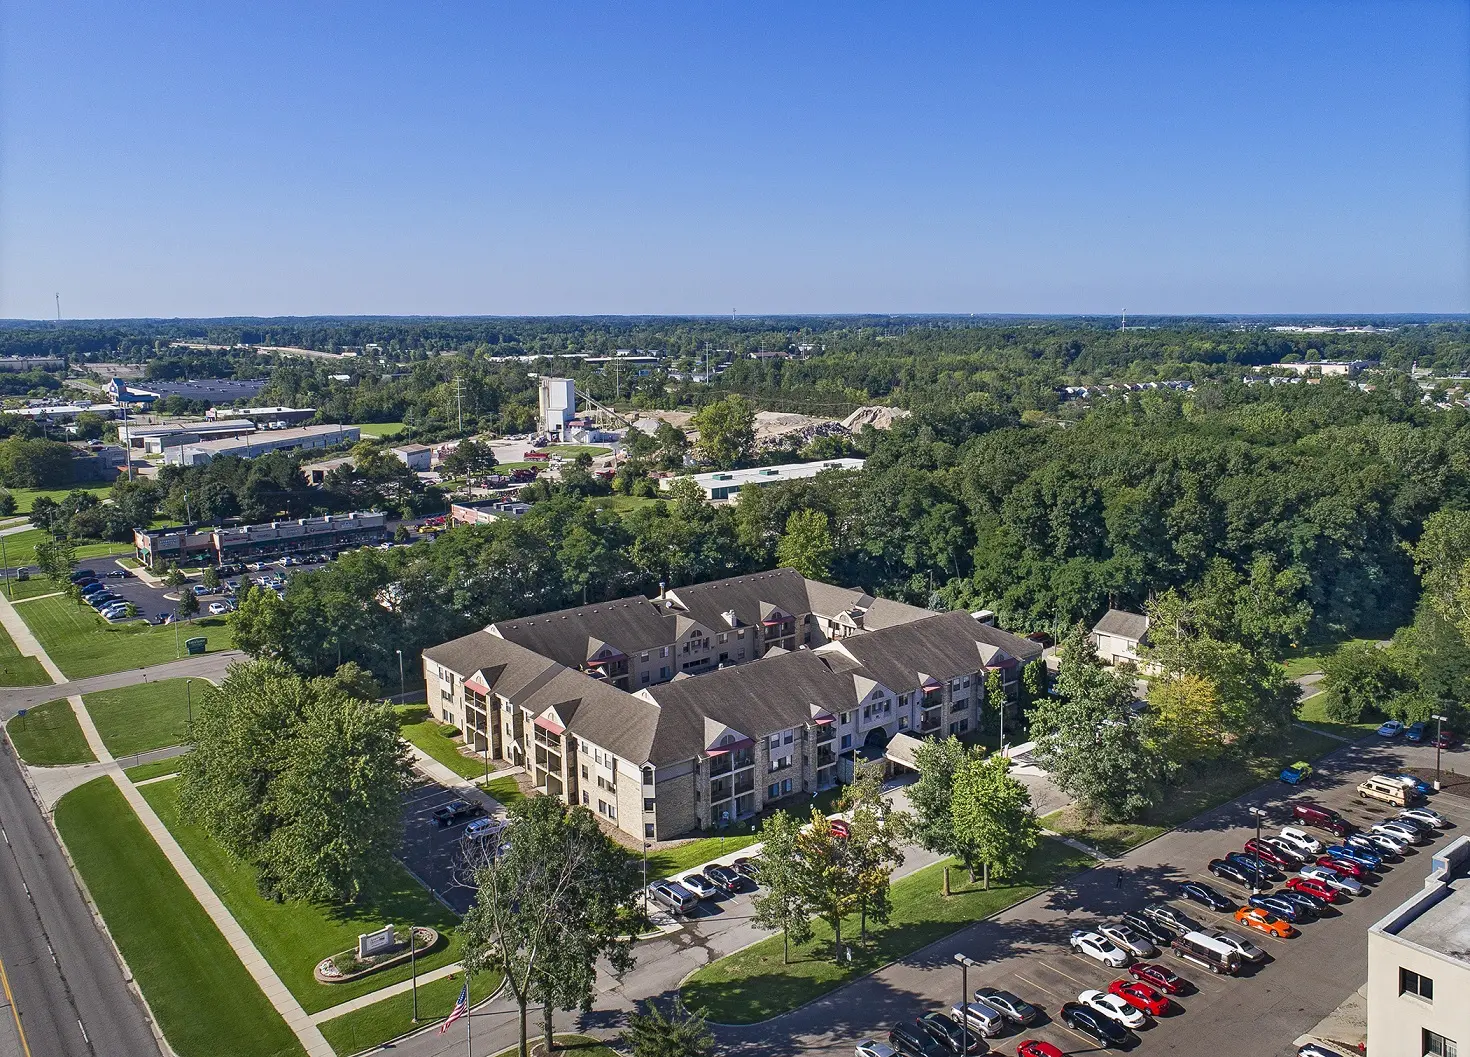 Aerial view of American House Carpenter, a senior living community in Ypsilanti, Michigan